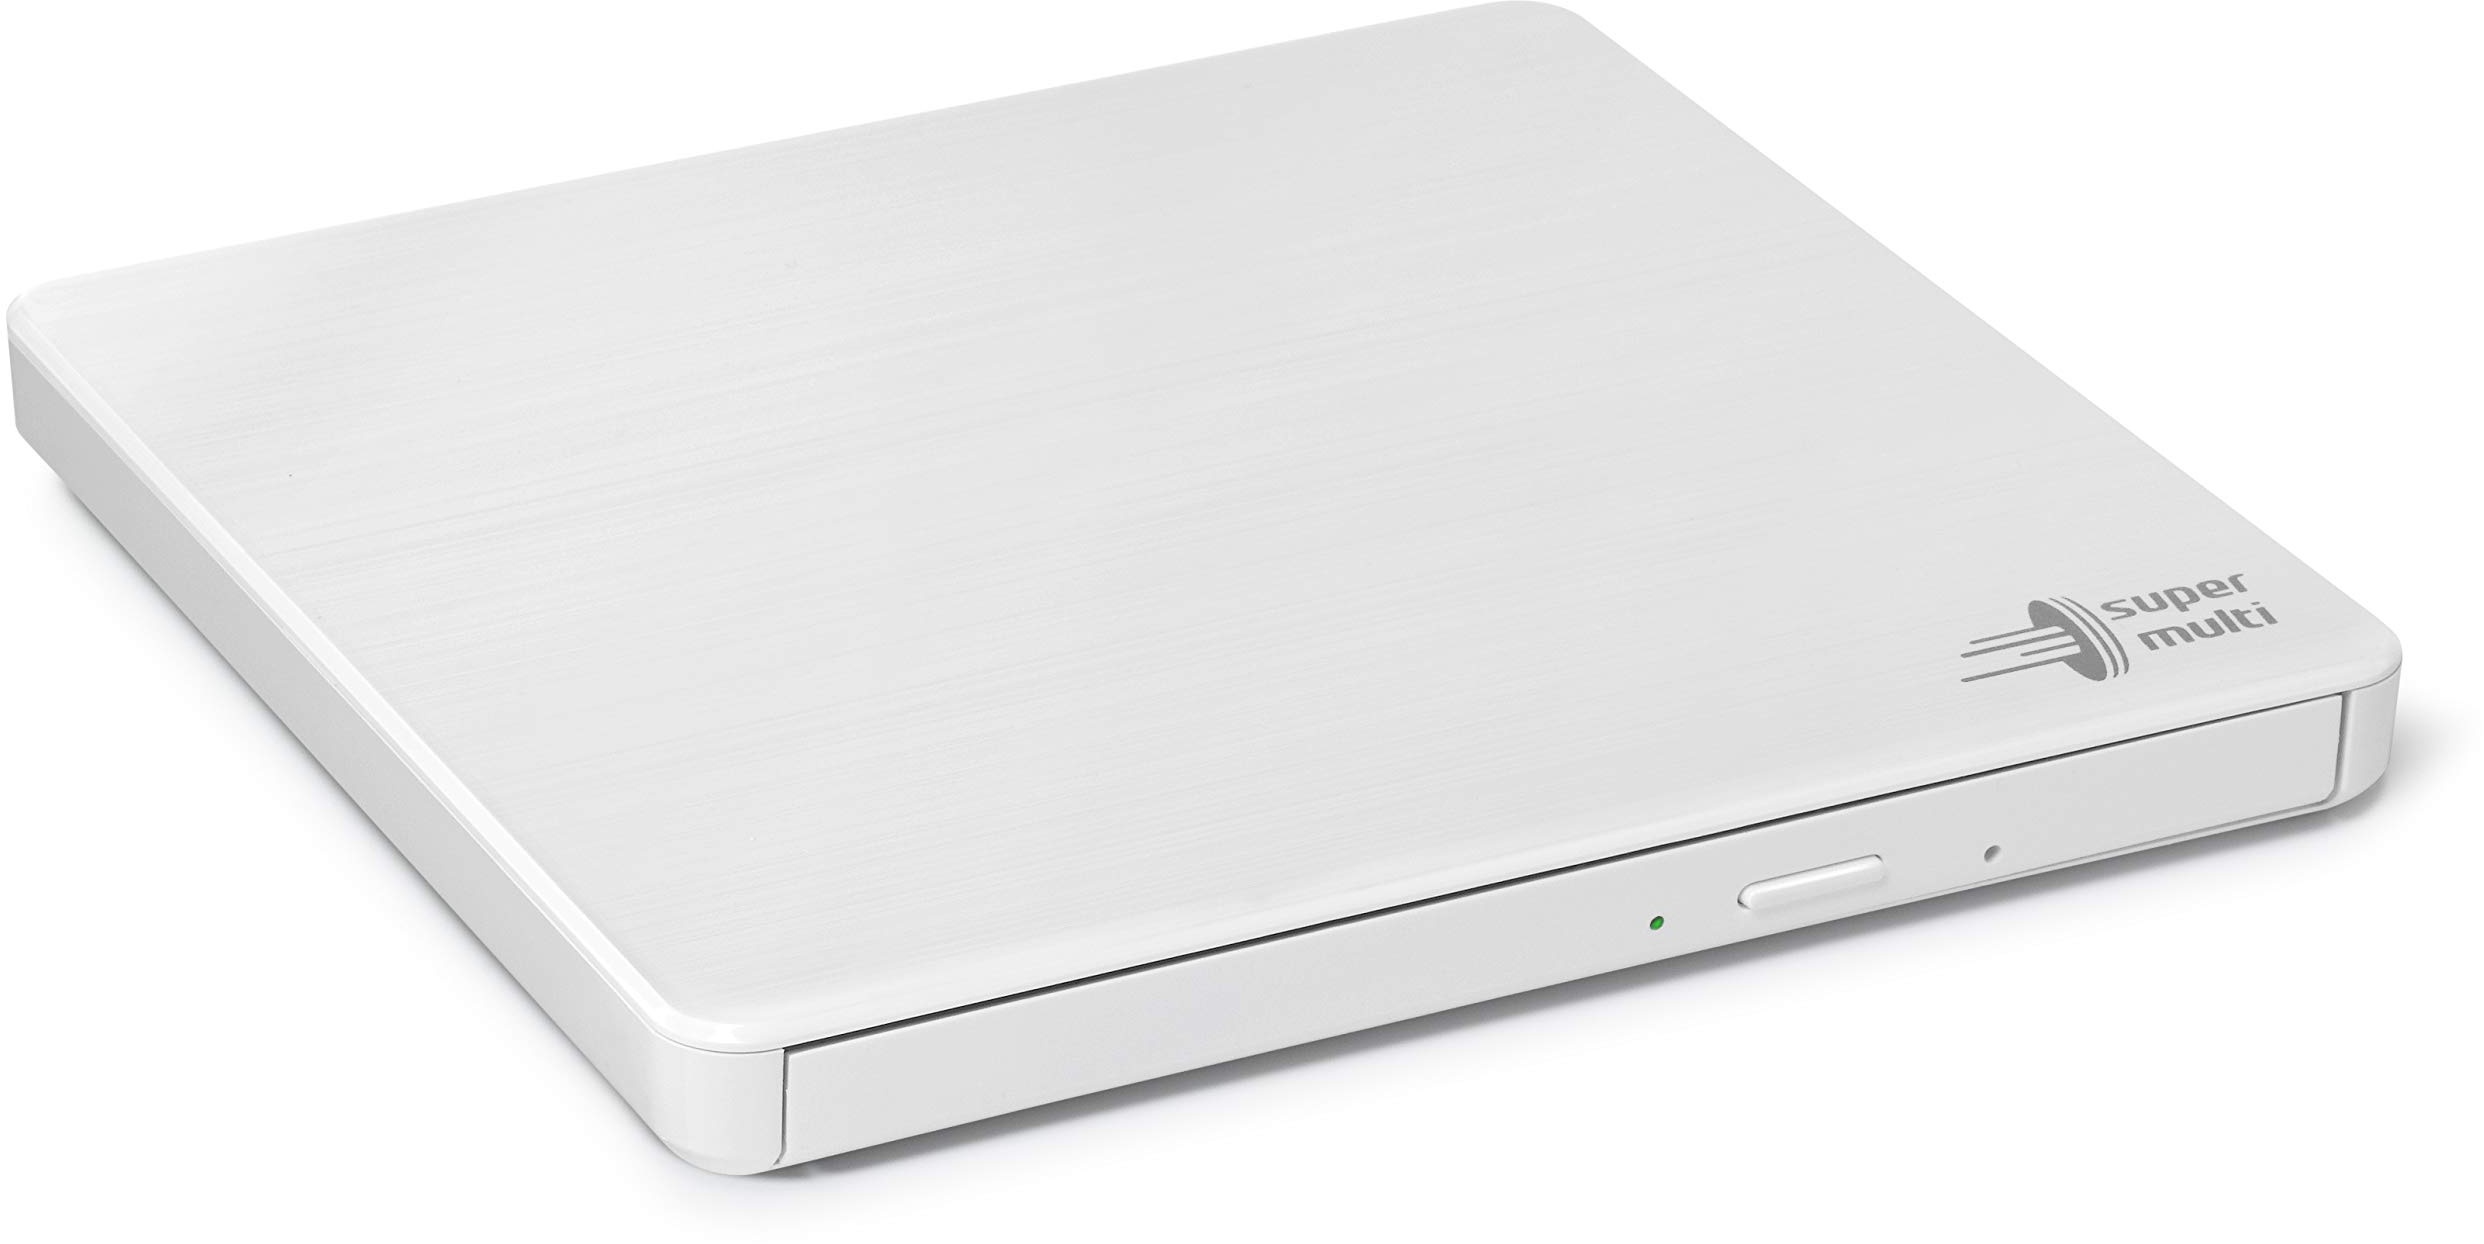 Hitachi-LG GP60 External DVD Drive, Slim Portable DVD Burner/Writer/Player for Laptop, Windows and Mac OS Compatible, USB 2.0, 8x Read/Write Speed - White